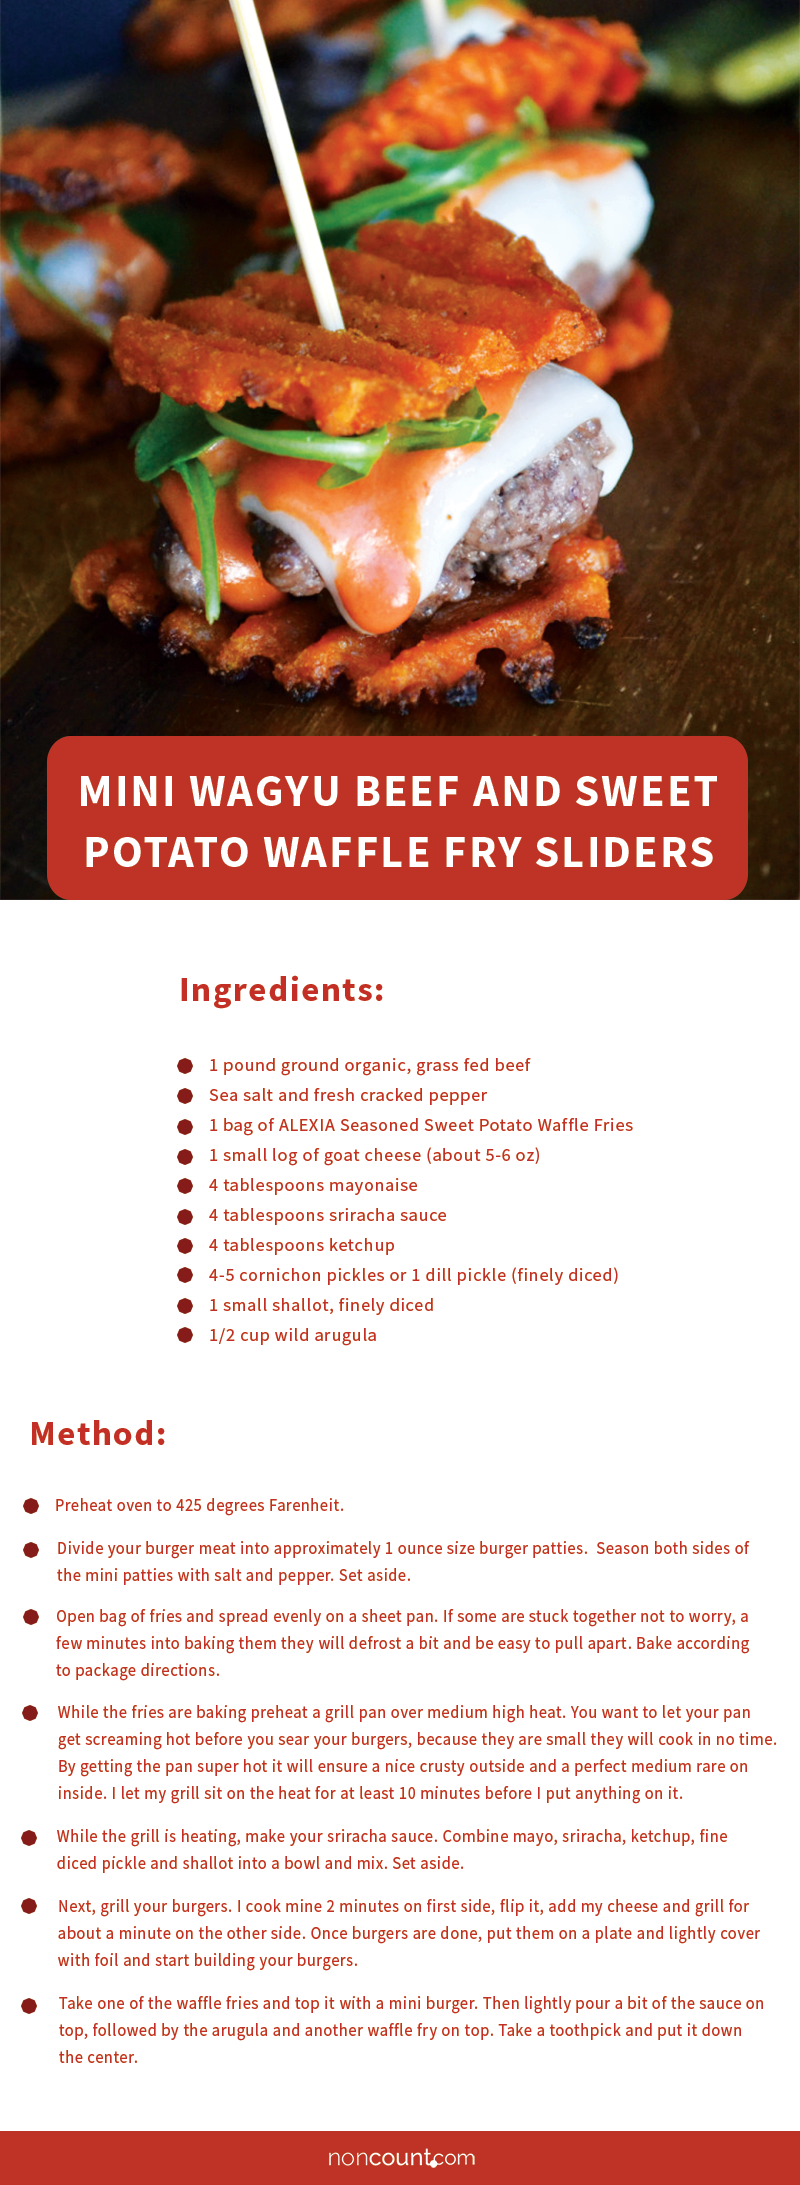 Mini Wagyu Beef and Sweet Potato Waffle Fry Sliders Party Food Recipe